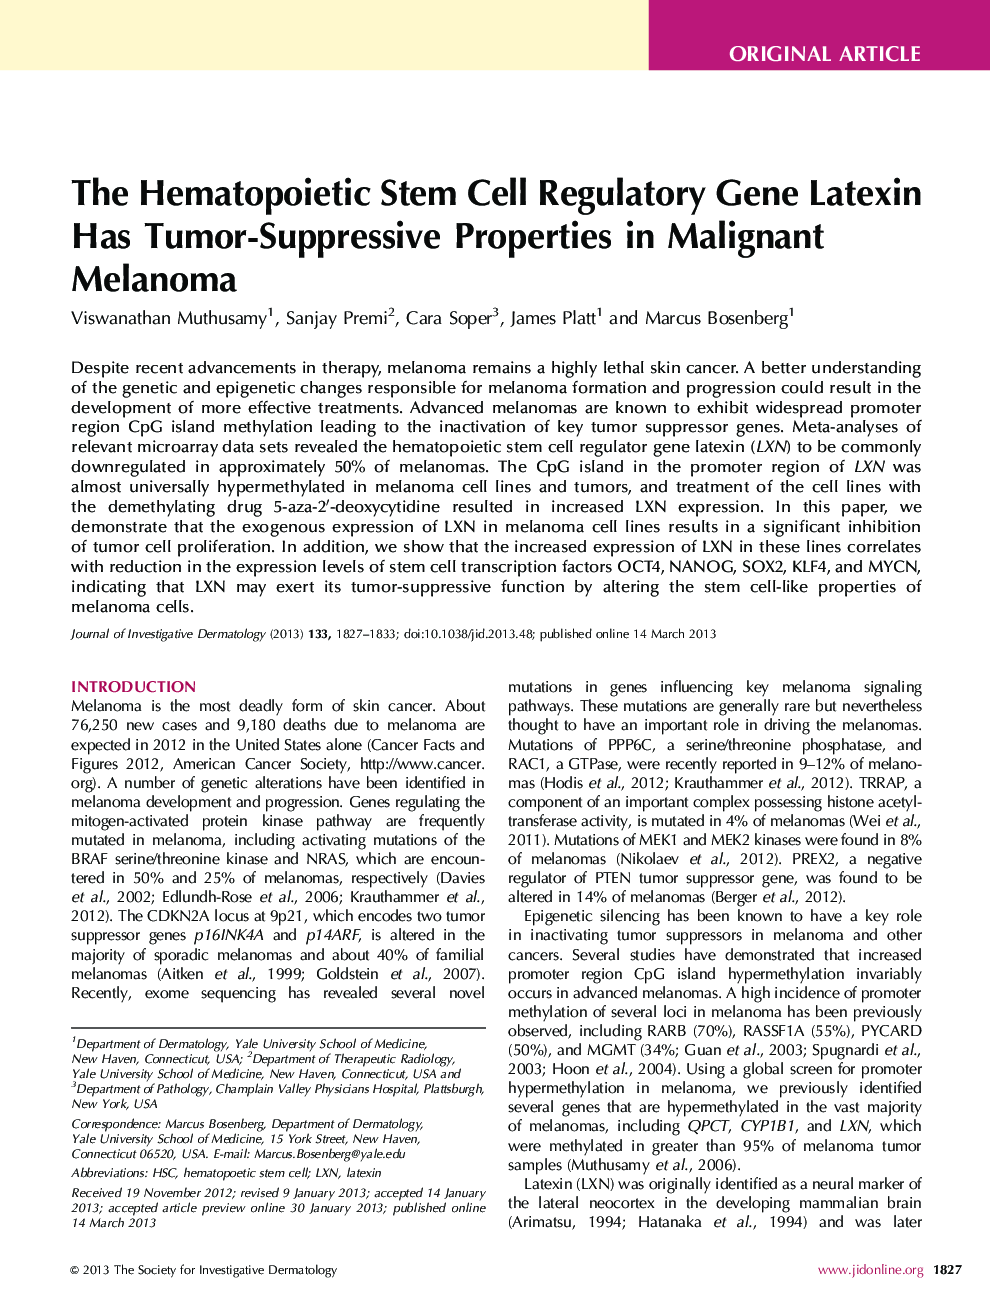 The Hematopoietic Stem Cell Regulatory Gene Latexin Has Tumor-Suppressive Properties in Malignant Melanoma